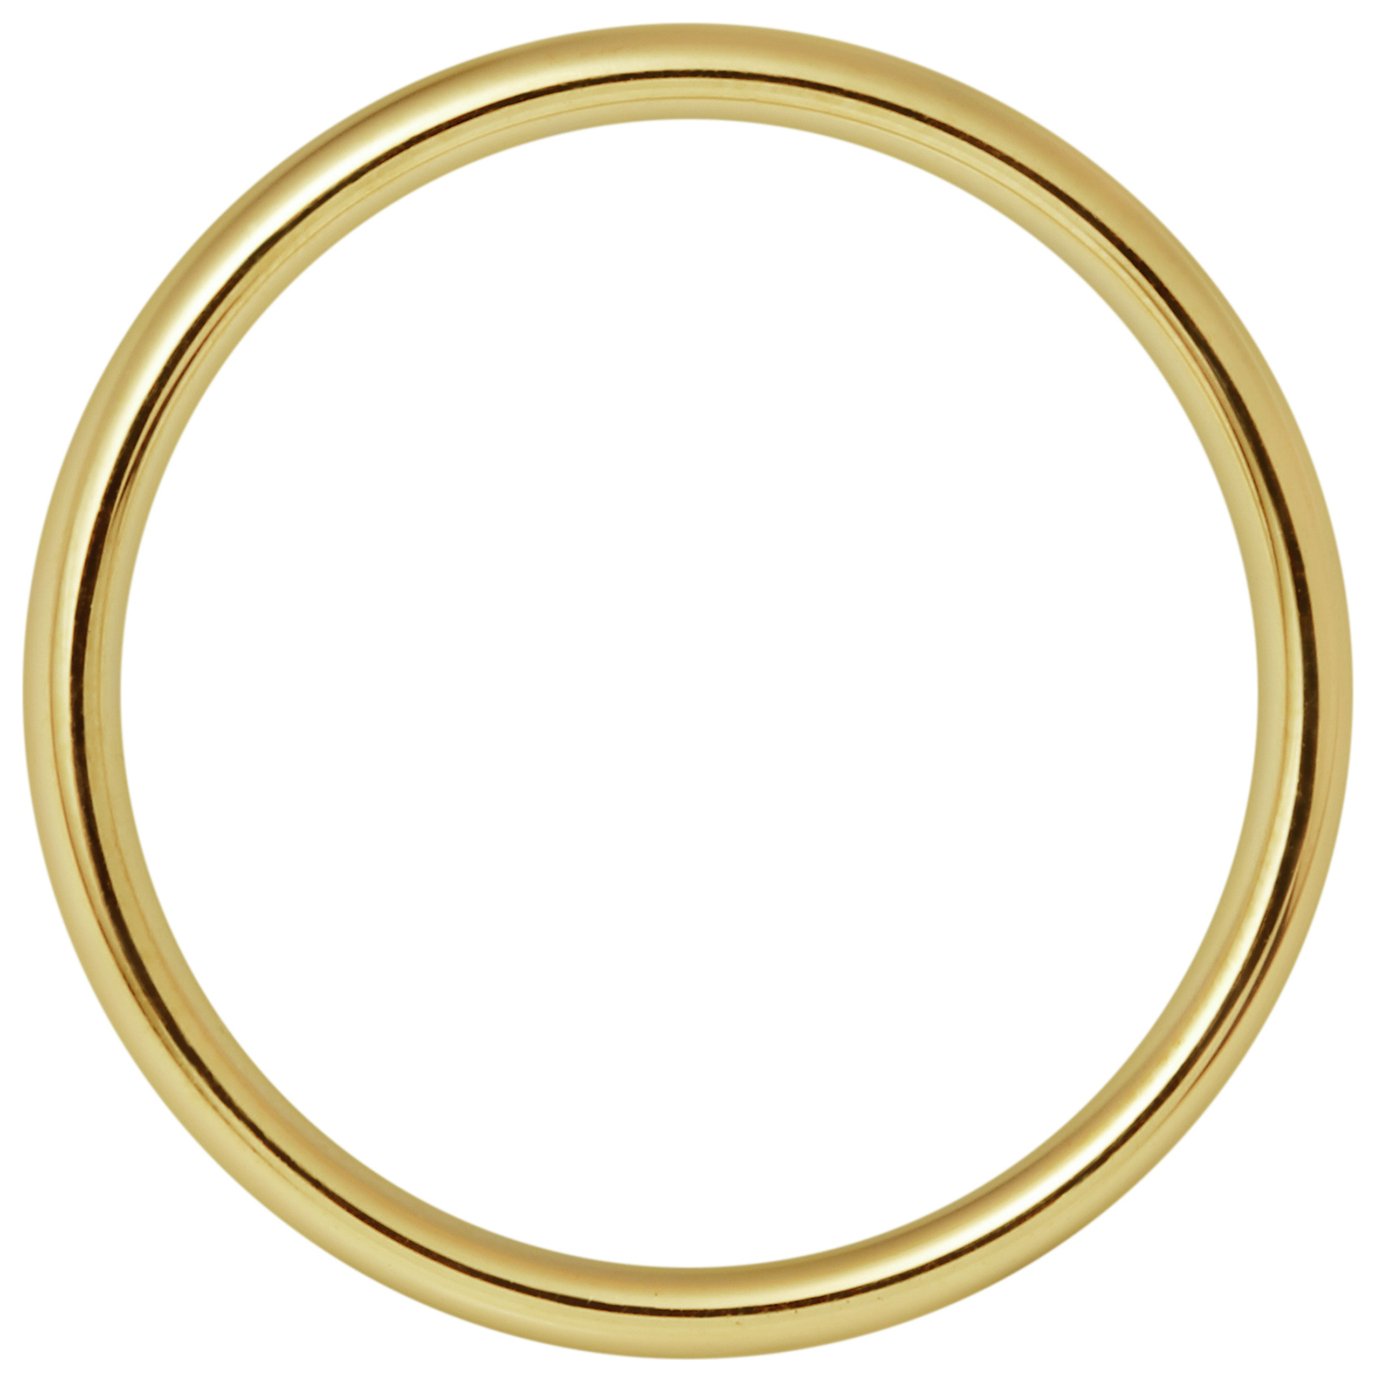 Inara Gold Plated Ceramic Stacking Ring Review